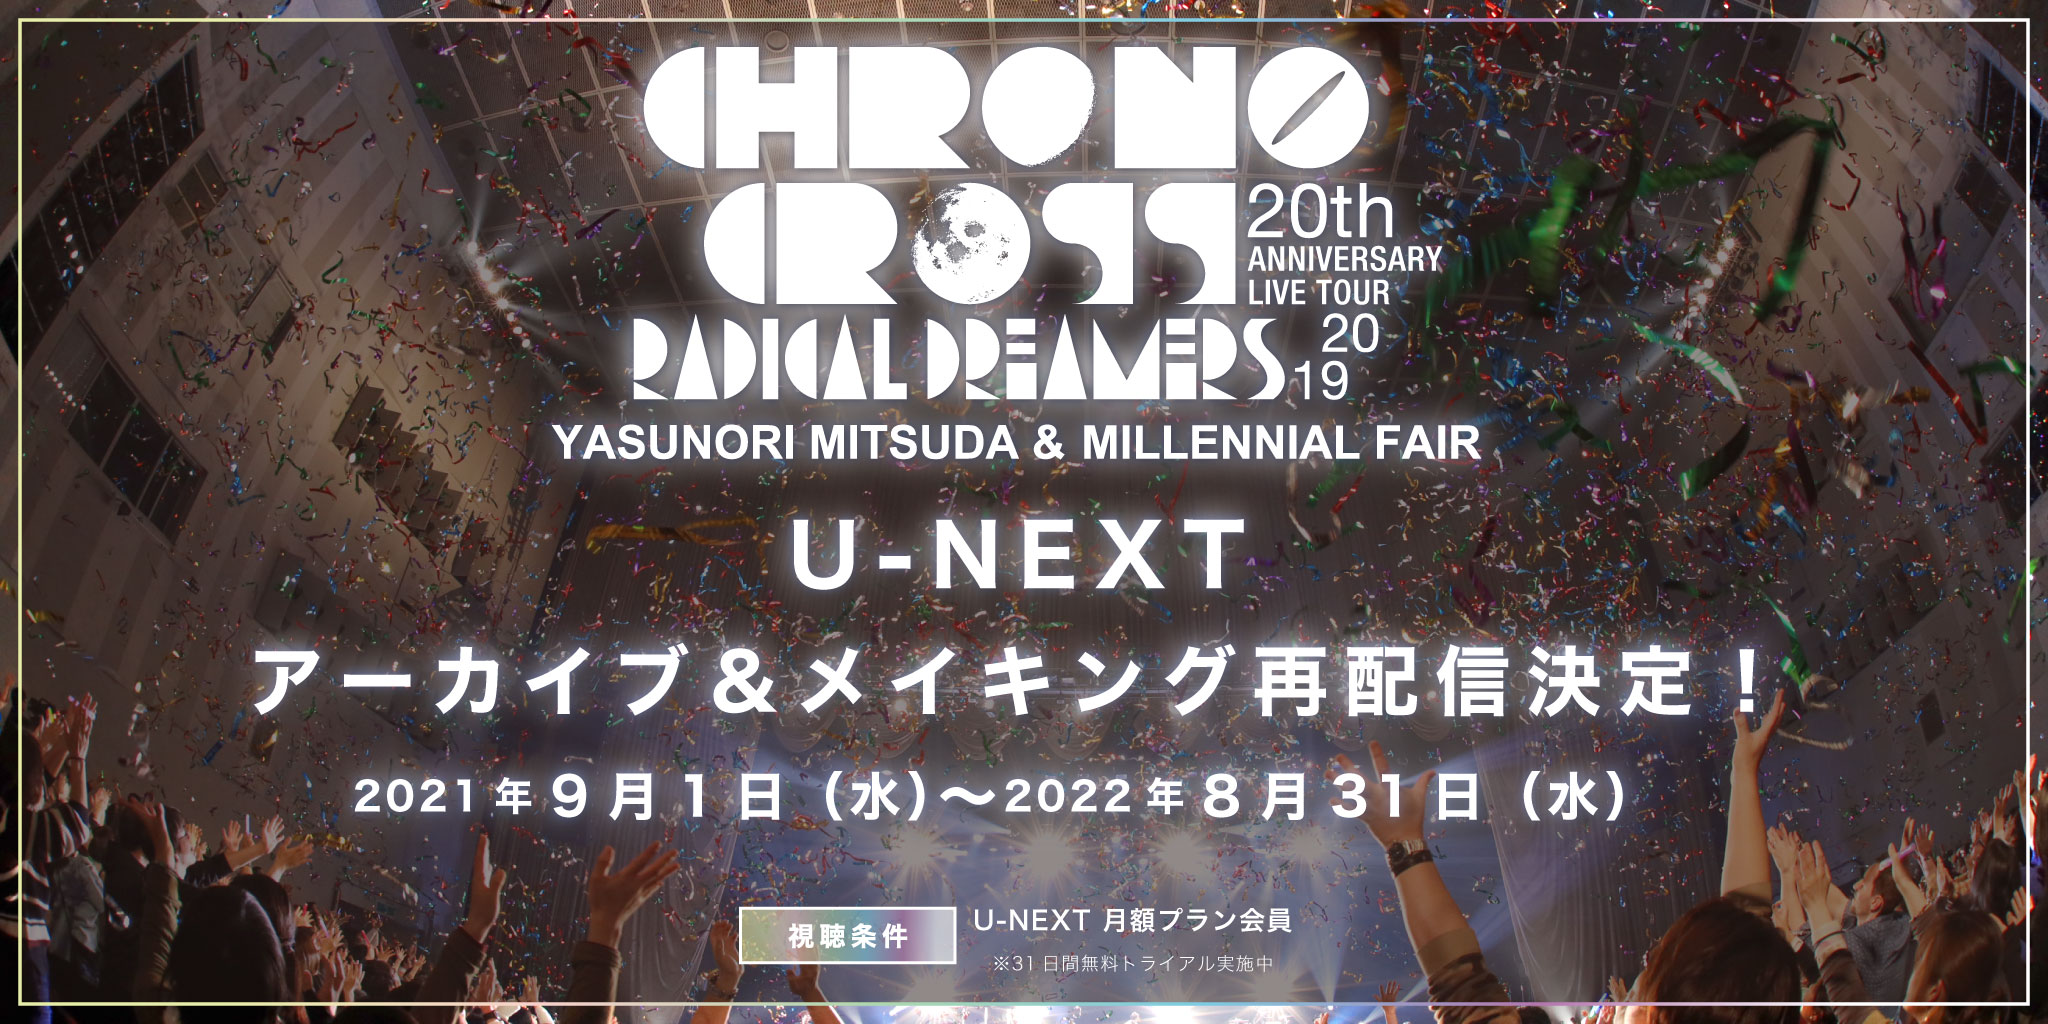 CHRONO CROSS 20th Anniversary Live Tour 2019 RADICAL DREAMERS Yasunori Mitsuda & Millennial Fair FINAL at NAKANO SUNPLAZA 2020